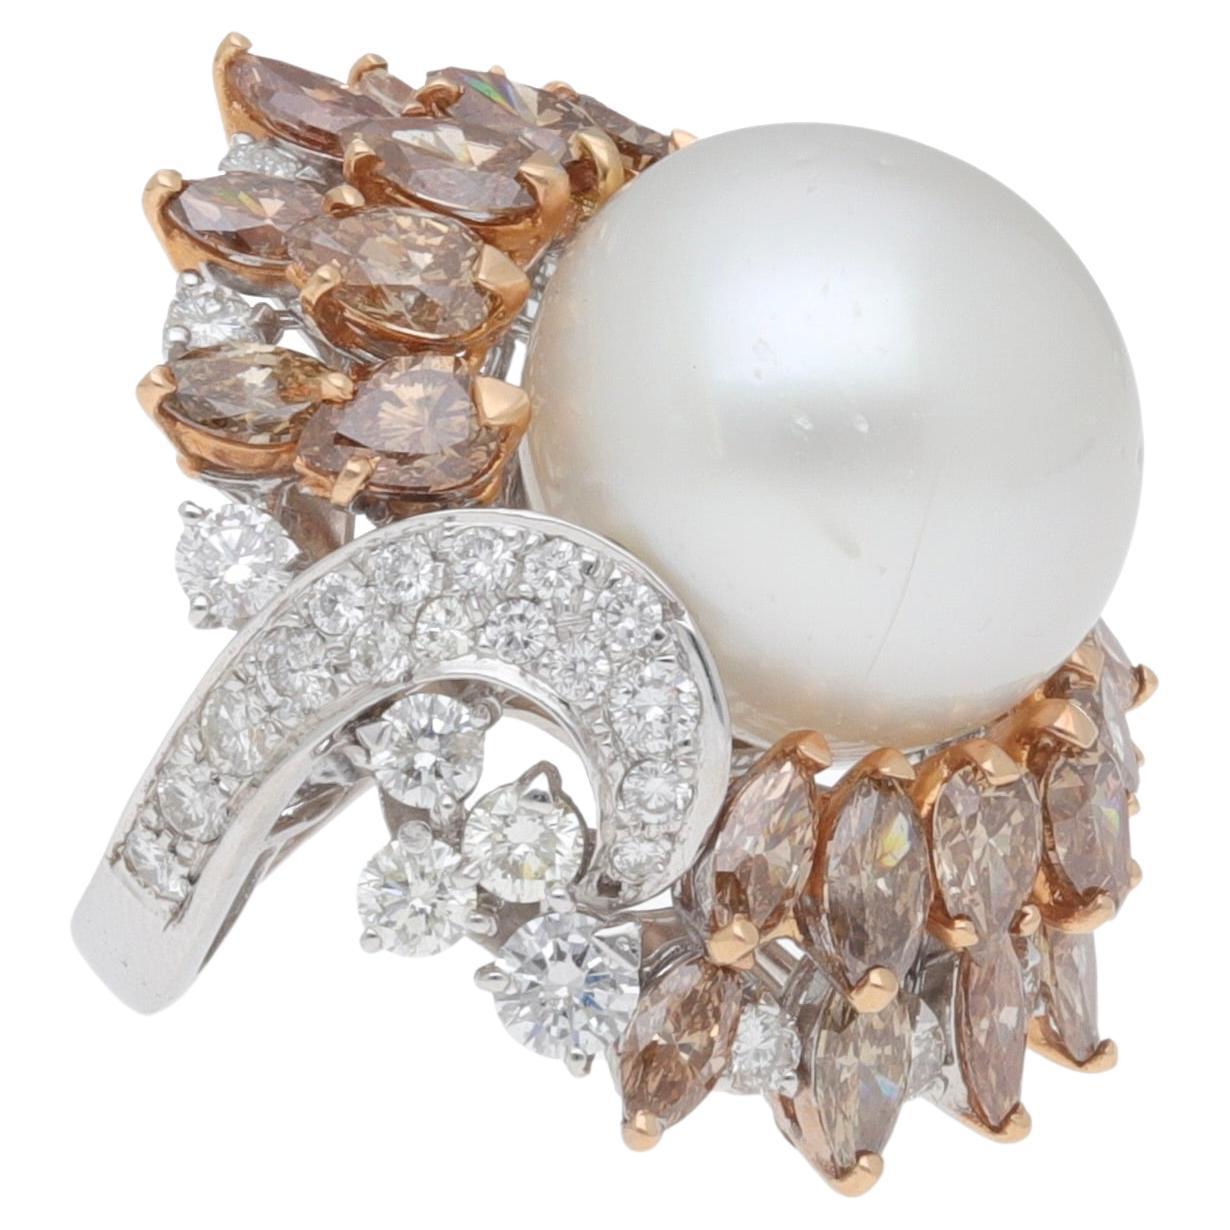 Fraleoni 18 Kt. White Gold Diamond Australian Pearl Cocktail Ring